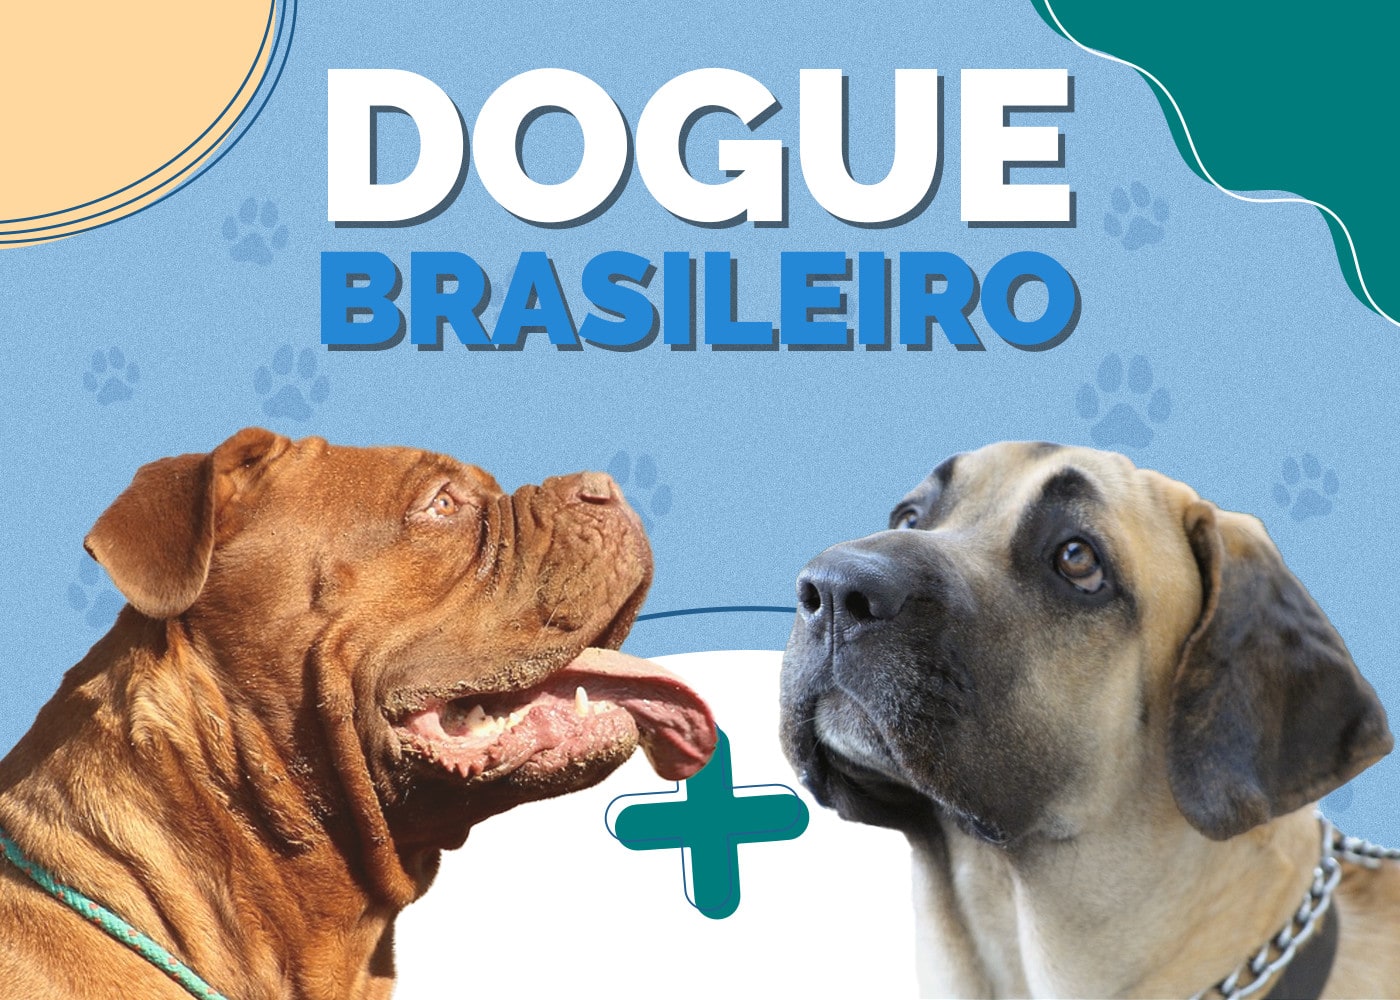 Dogue Brasileiro